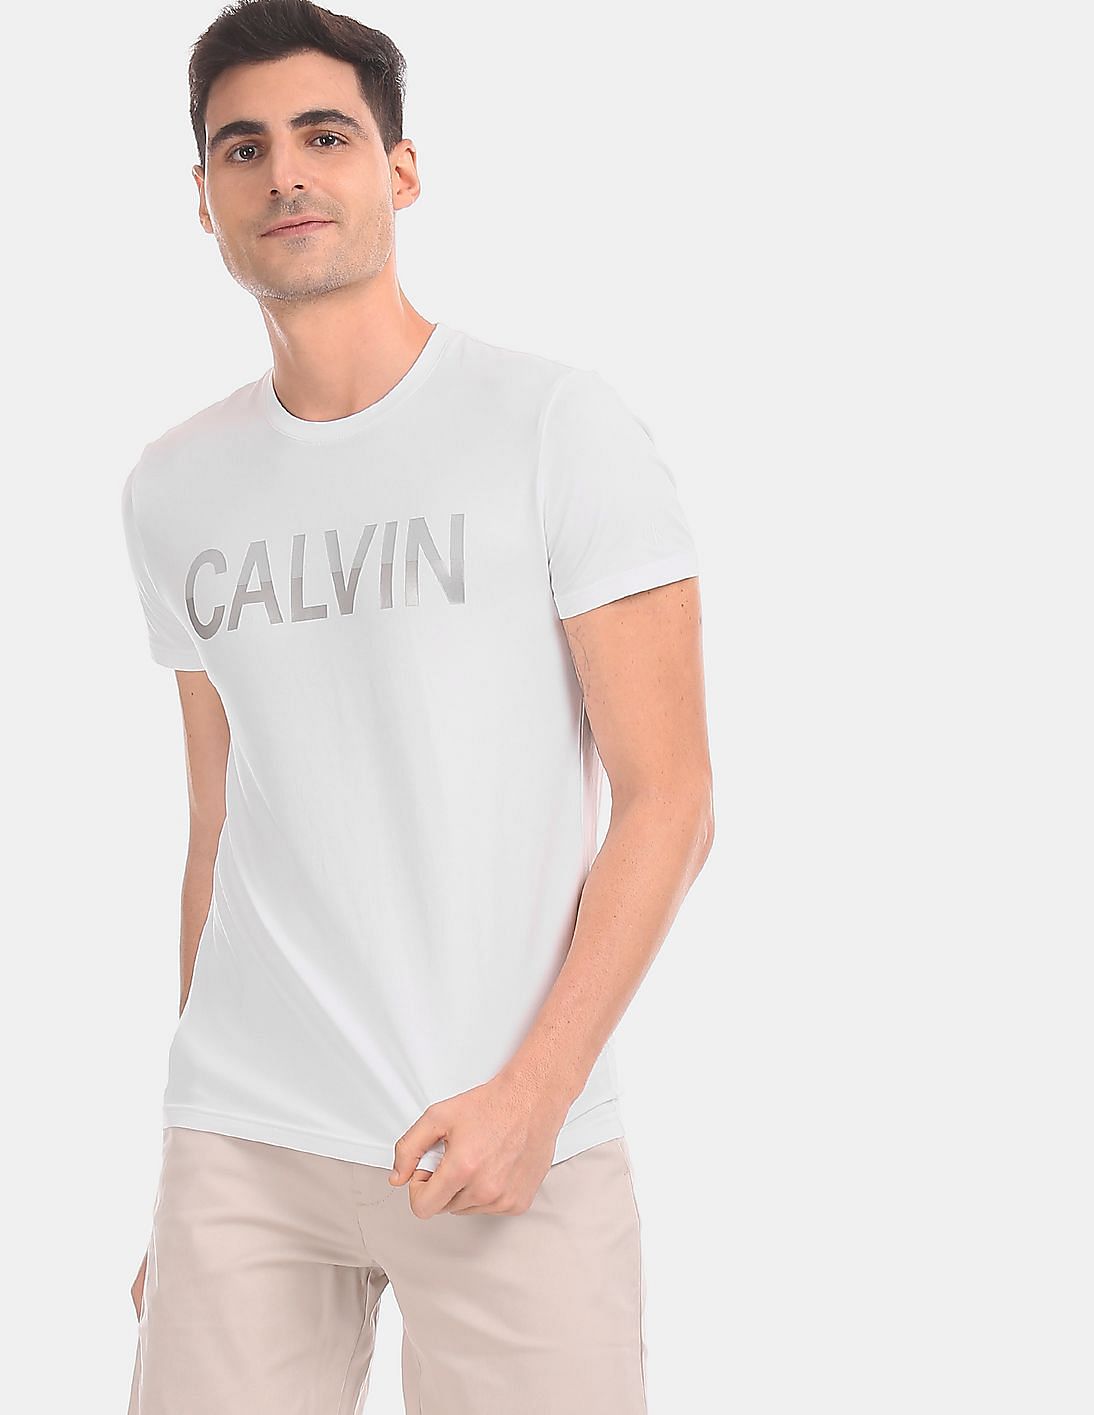 Calvin Klein T Shirt Top Sellers, UP TO 60% OFF | www.loop-cn.com